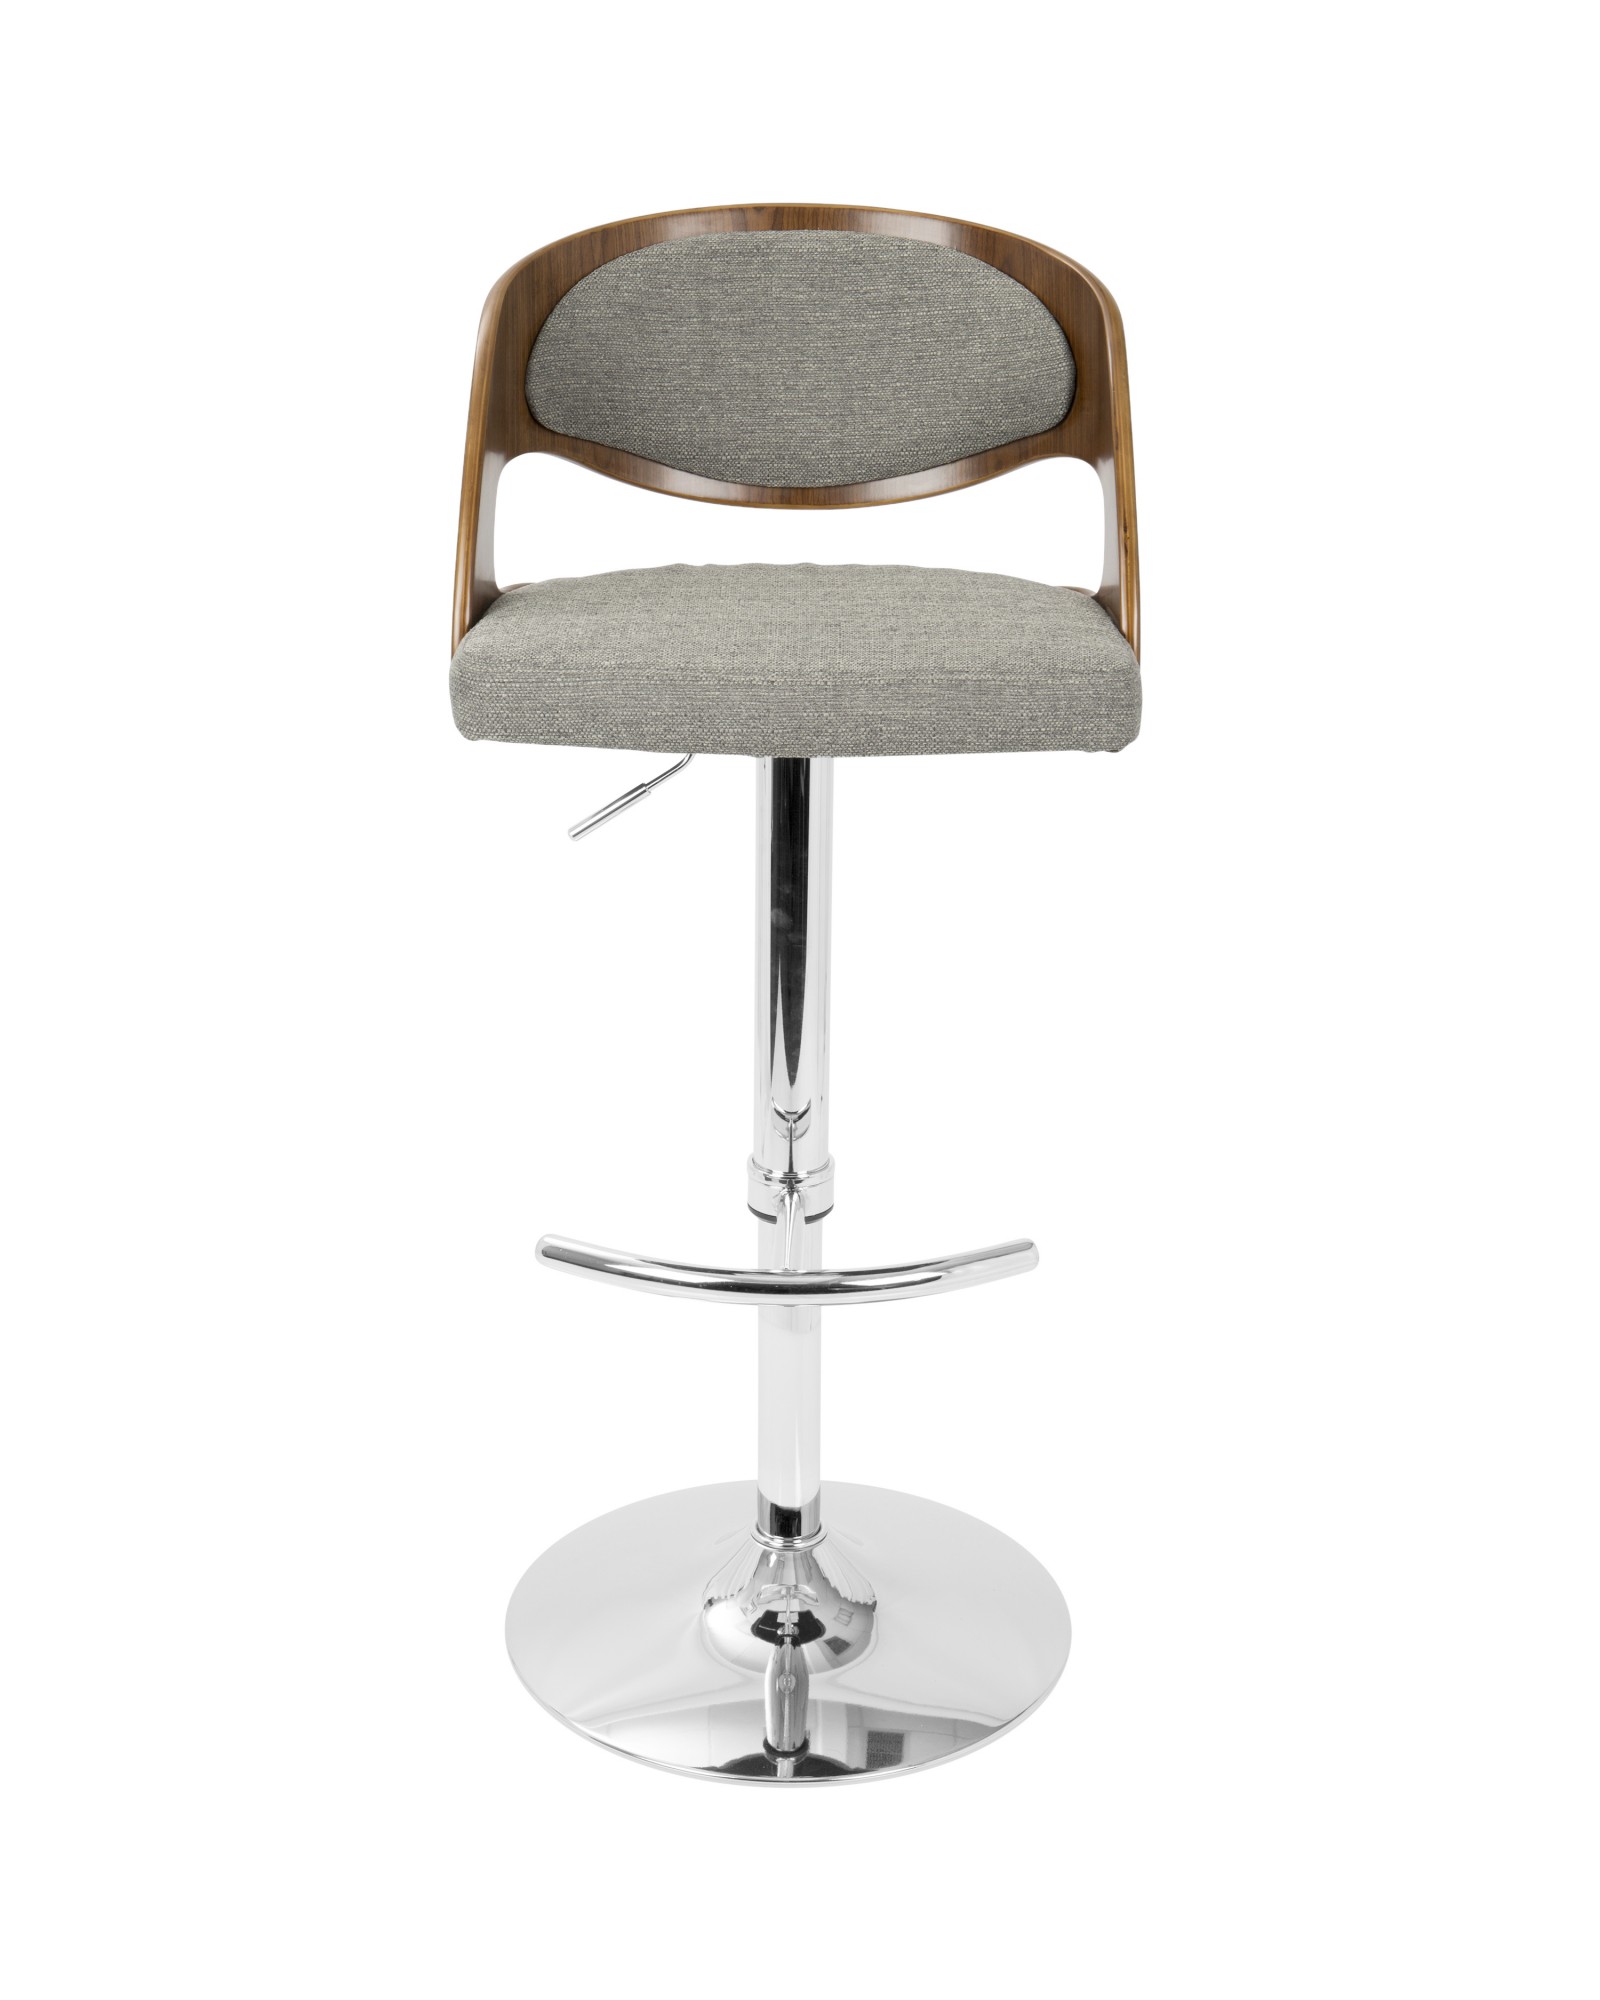 Pino Mid-Century Modern Adjustable Barstool with Swivel in Walnut and Grey Fabric